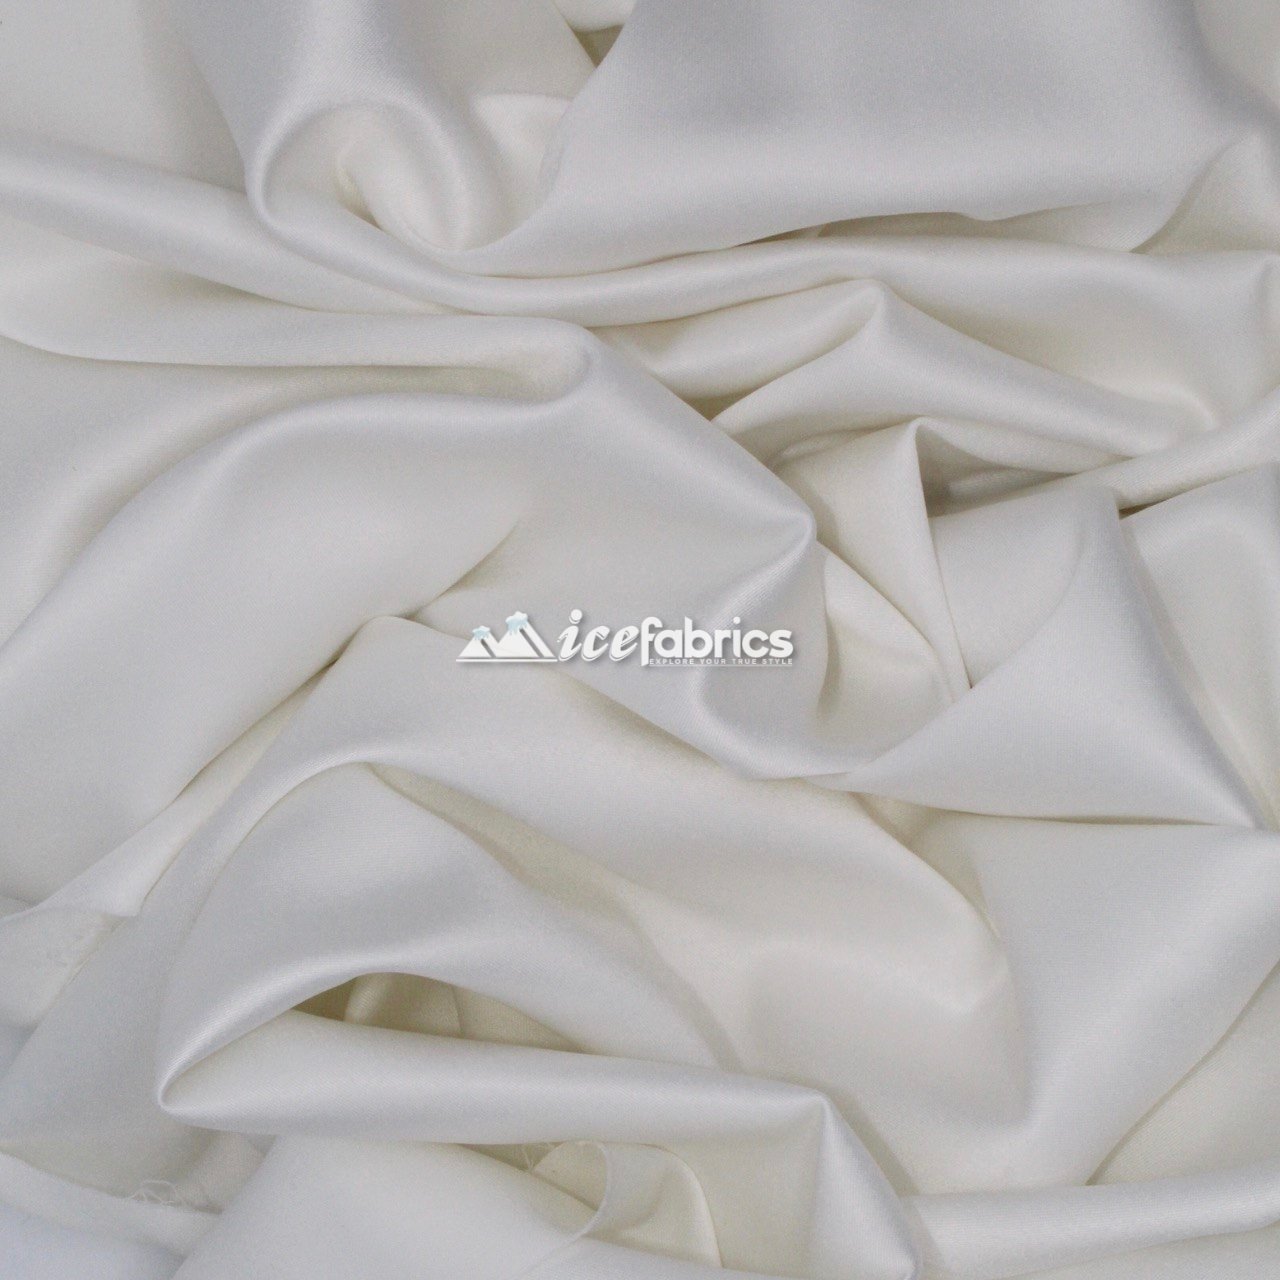 Armani Silk Fabric/ Thick Stretch Satin Fabric/ Spandex Fabric/ IvorySatin FabricICEFABRICICE FABRICSIvoryPer YardArmani Silk Fabric/ Thick Stretch Satin Fabric/ Spandex Fabric/ Ivory ICEFABRIC